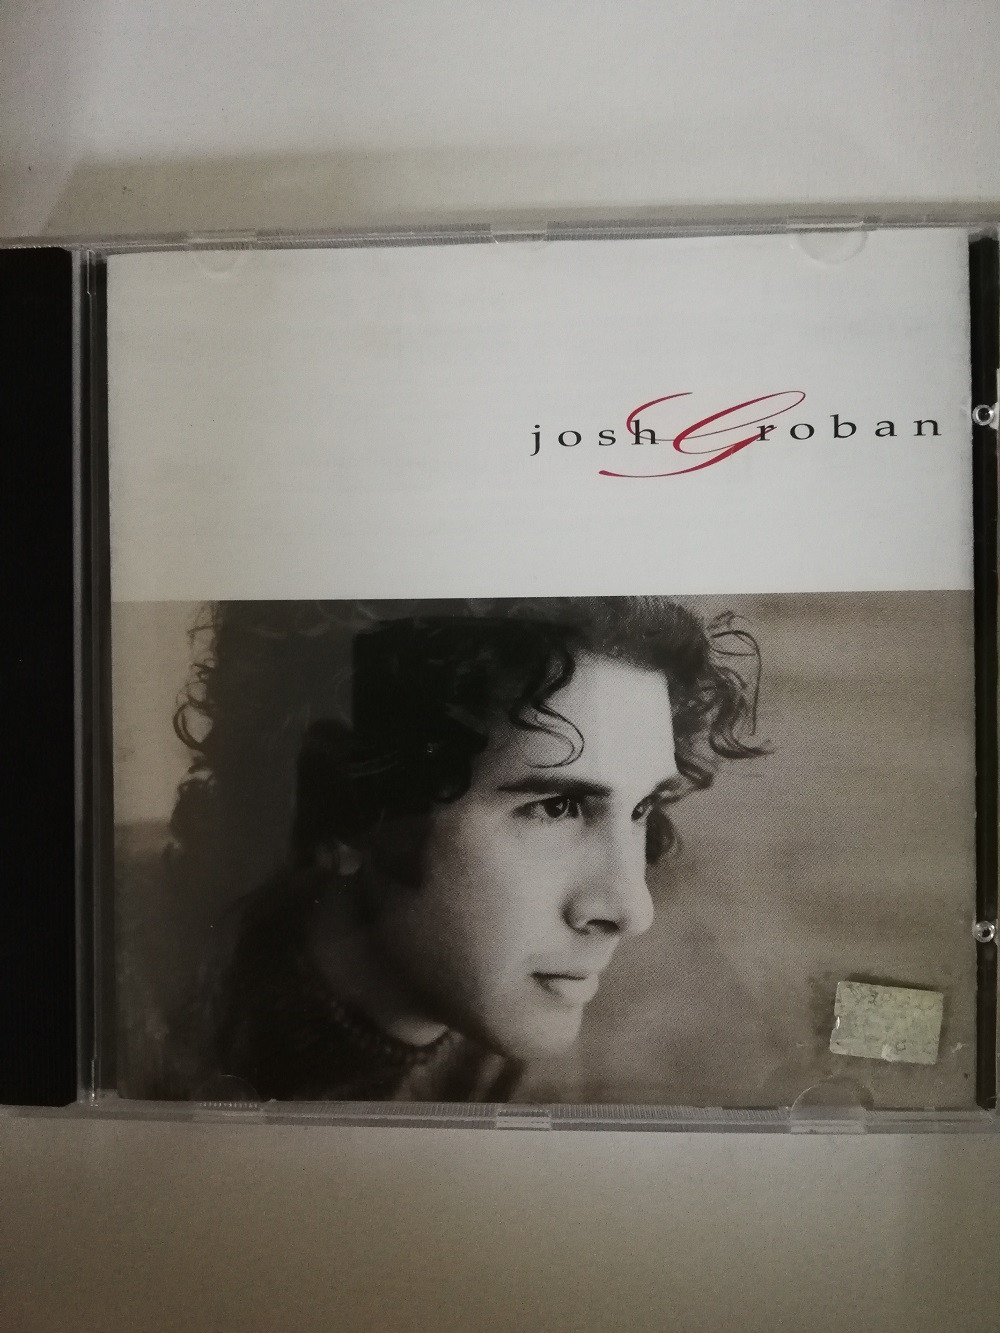 Imagen CD JOSH GROBAN - JOSH GROBAN